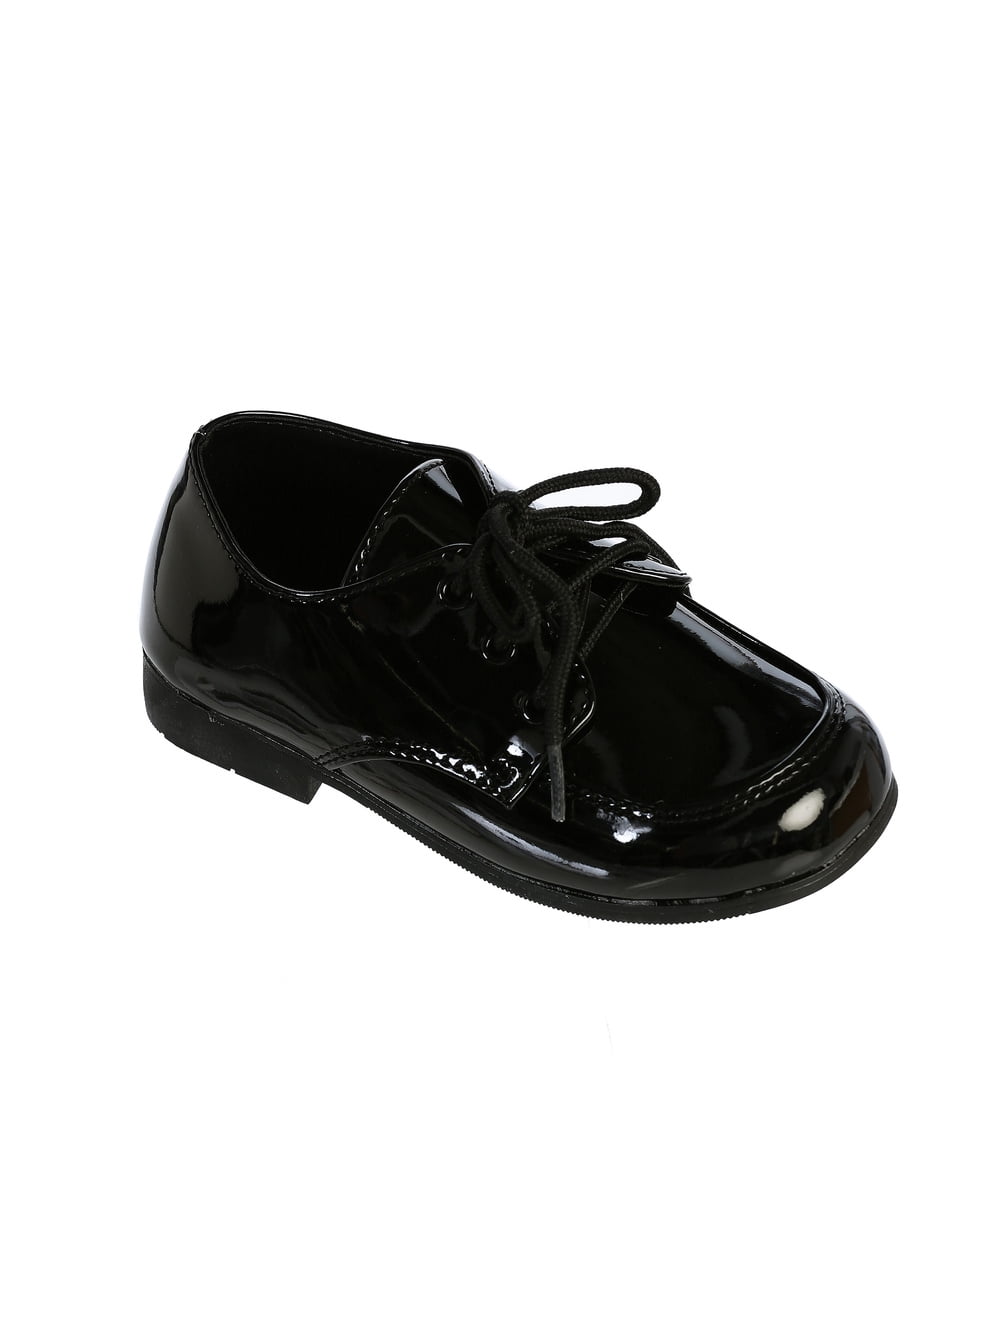 Avery Hill Boys Leatherette Derby Oxford Dress Shoes - Walmart.com